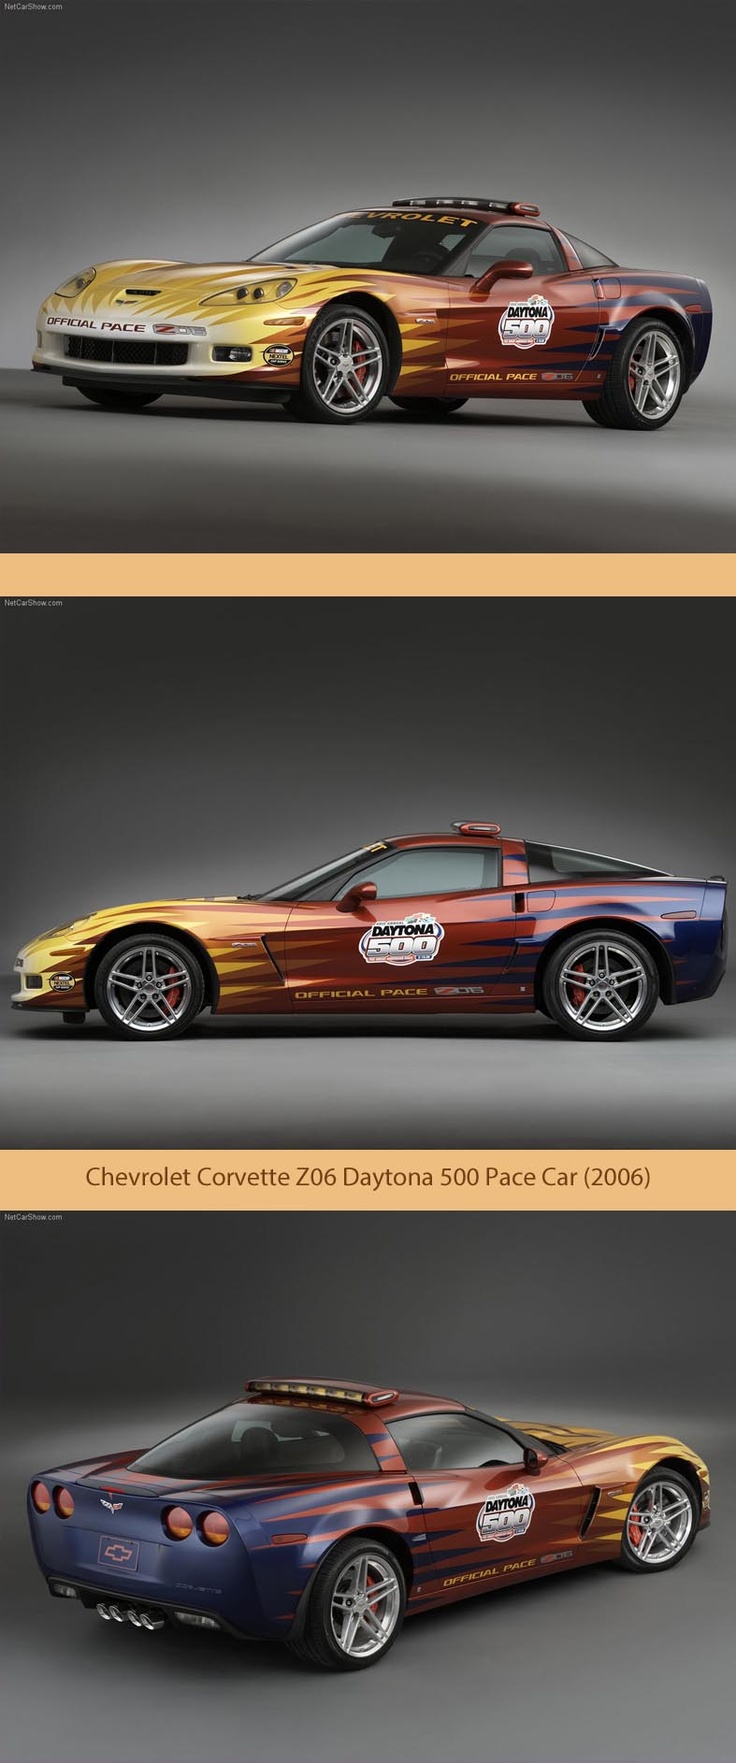 Chevrolet Corvette Z06 Daytona Pace Car